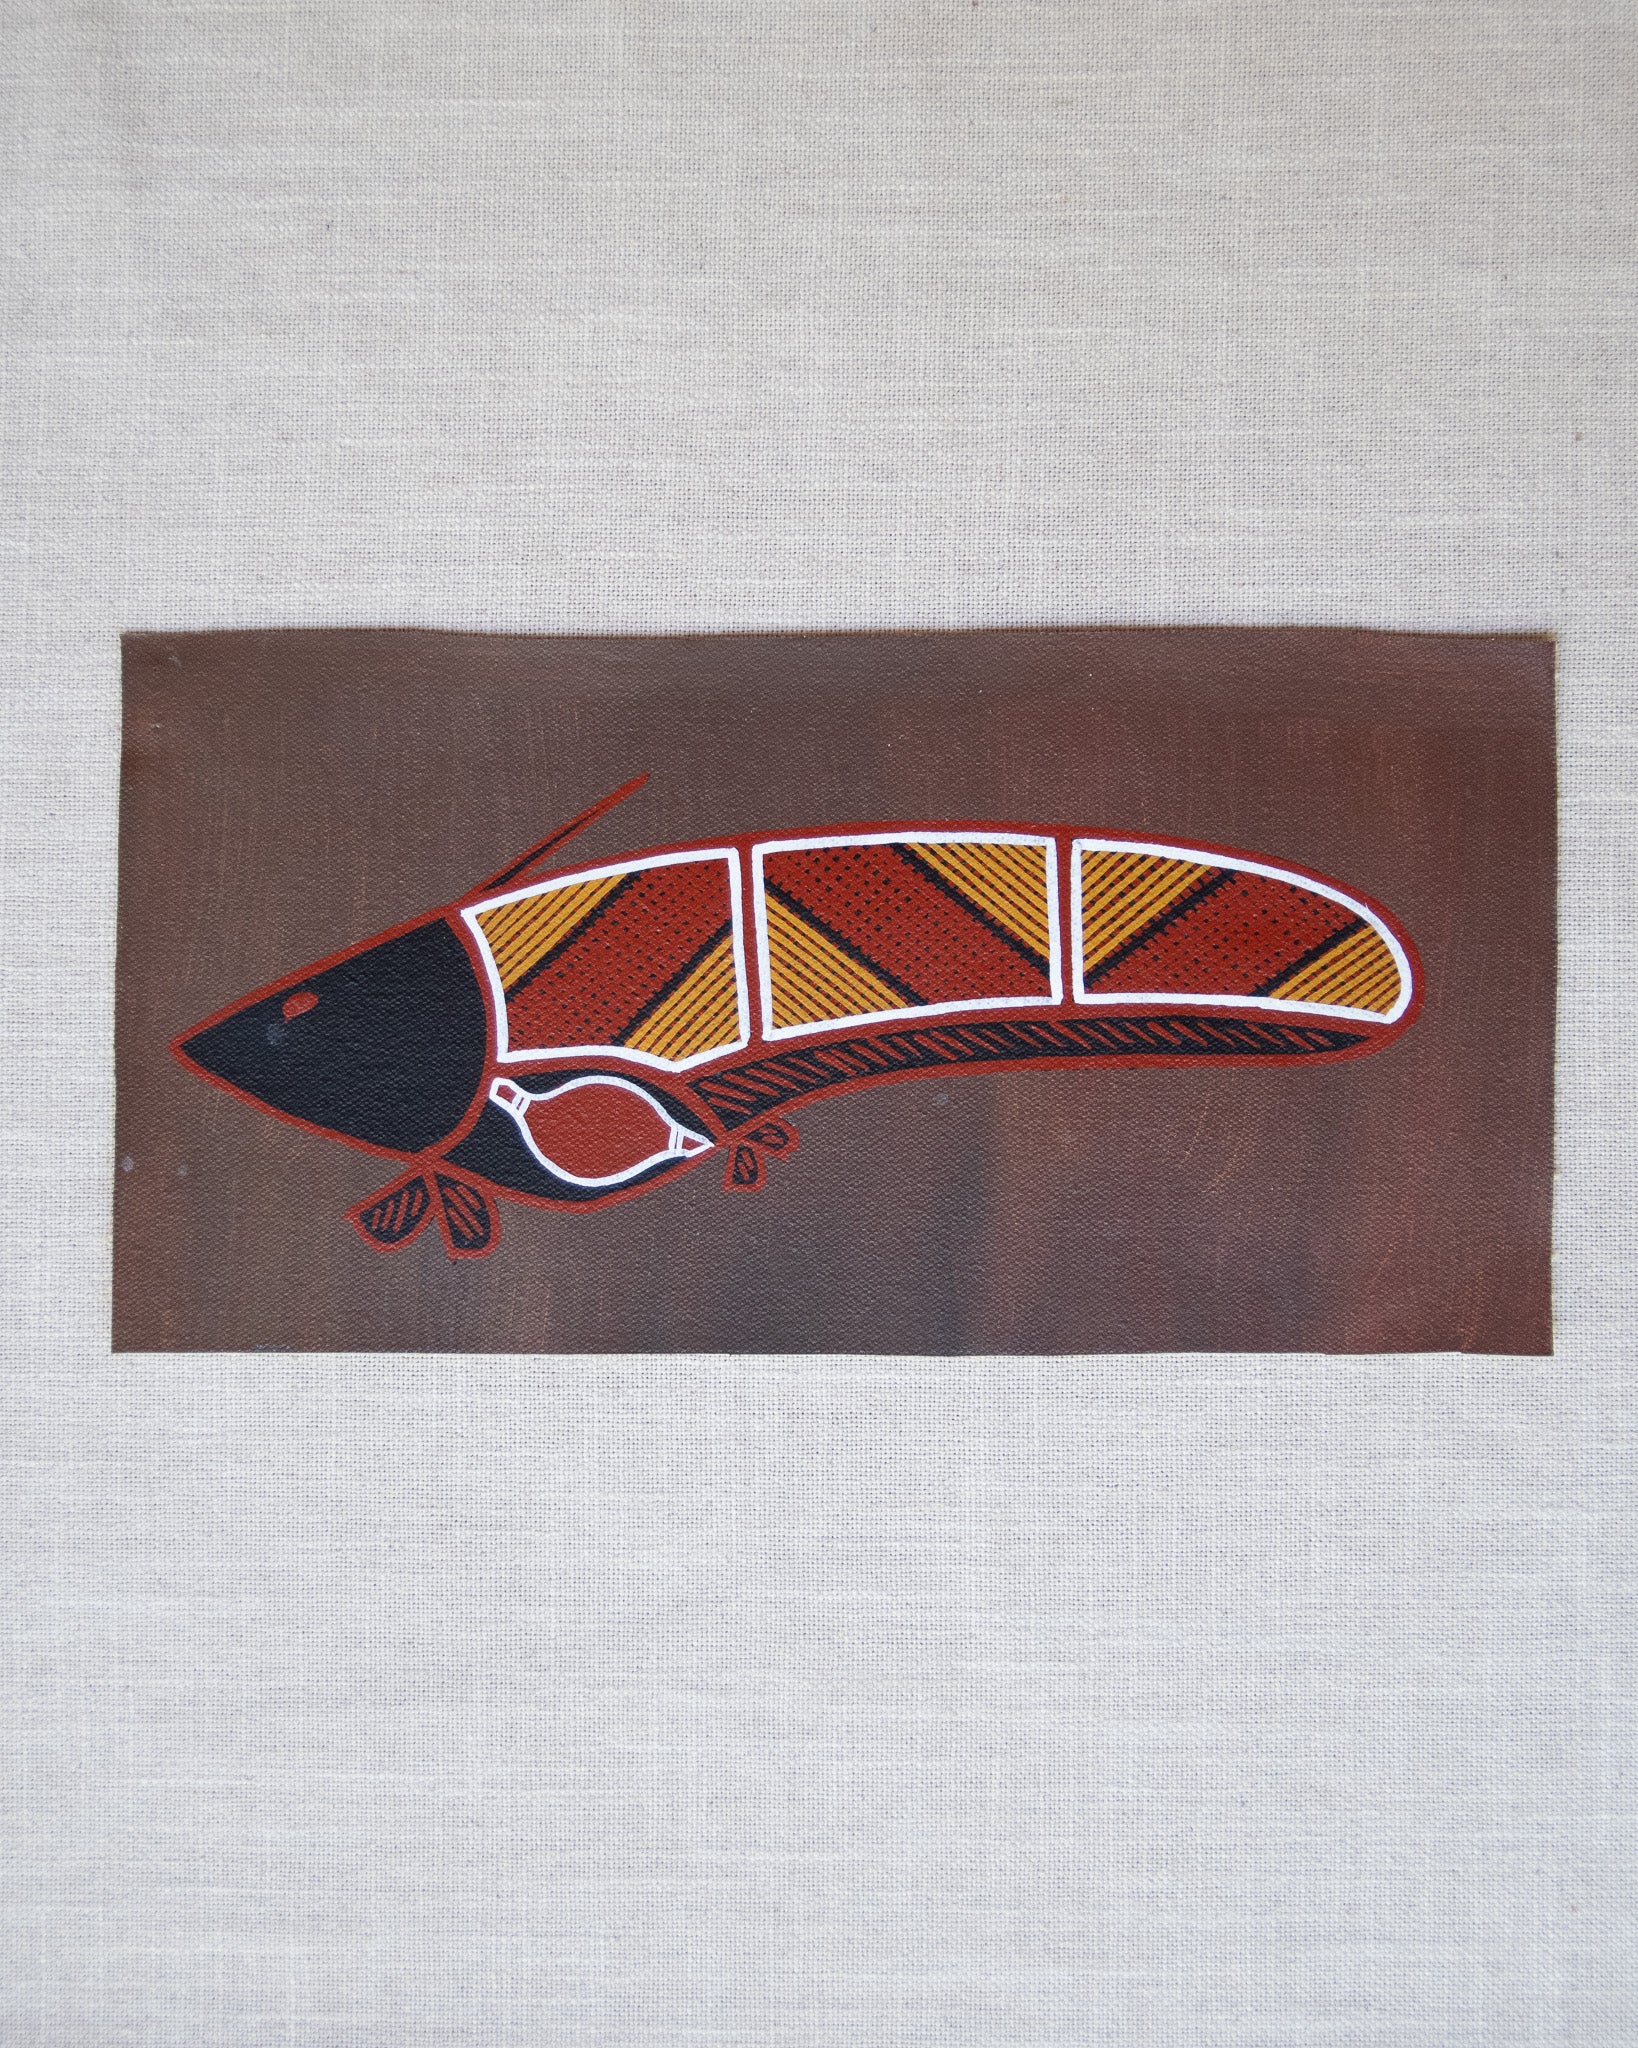 Catfish by Karl Haala